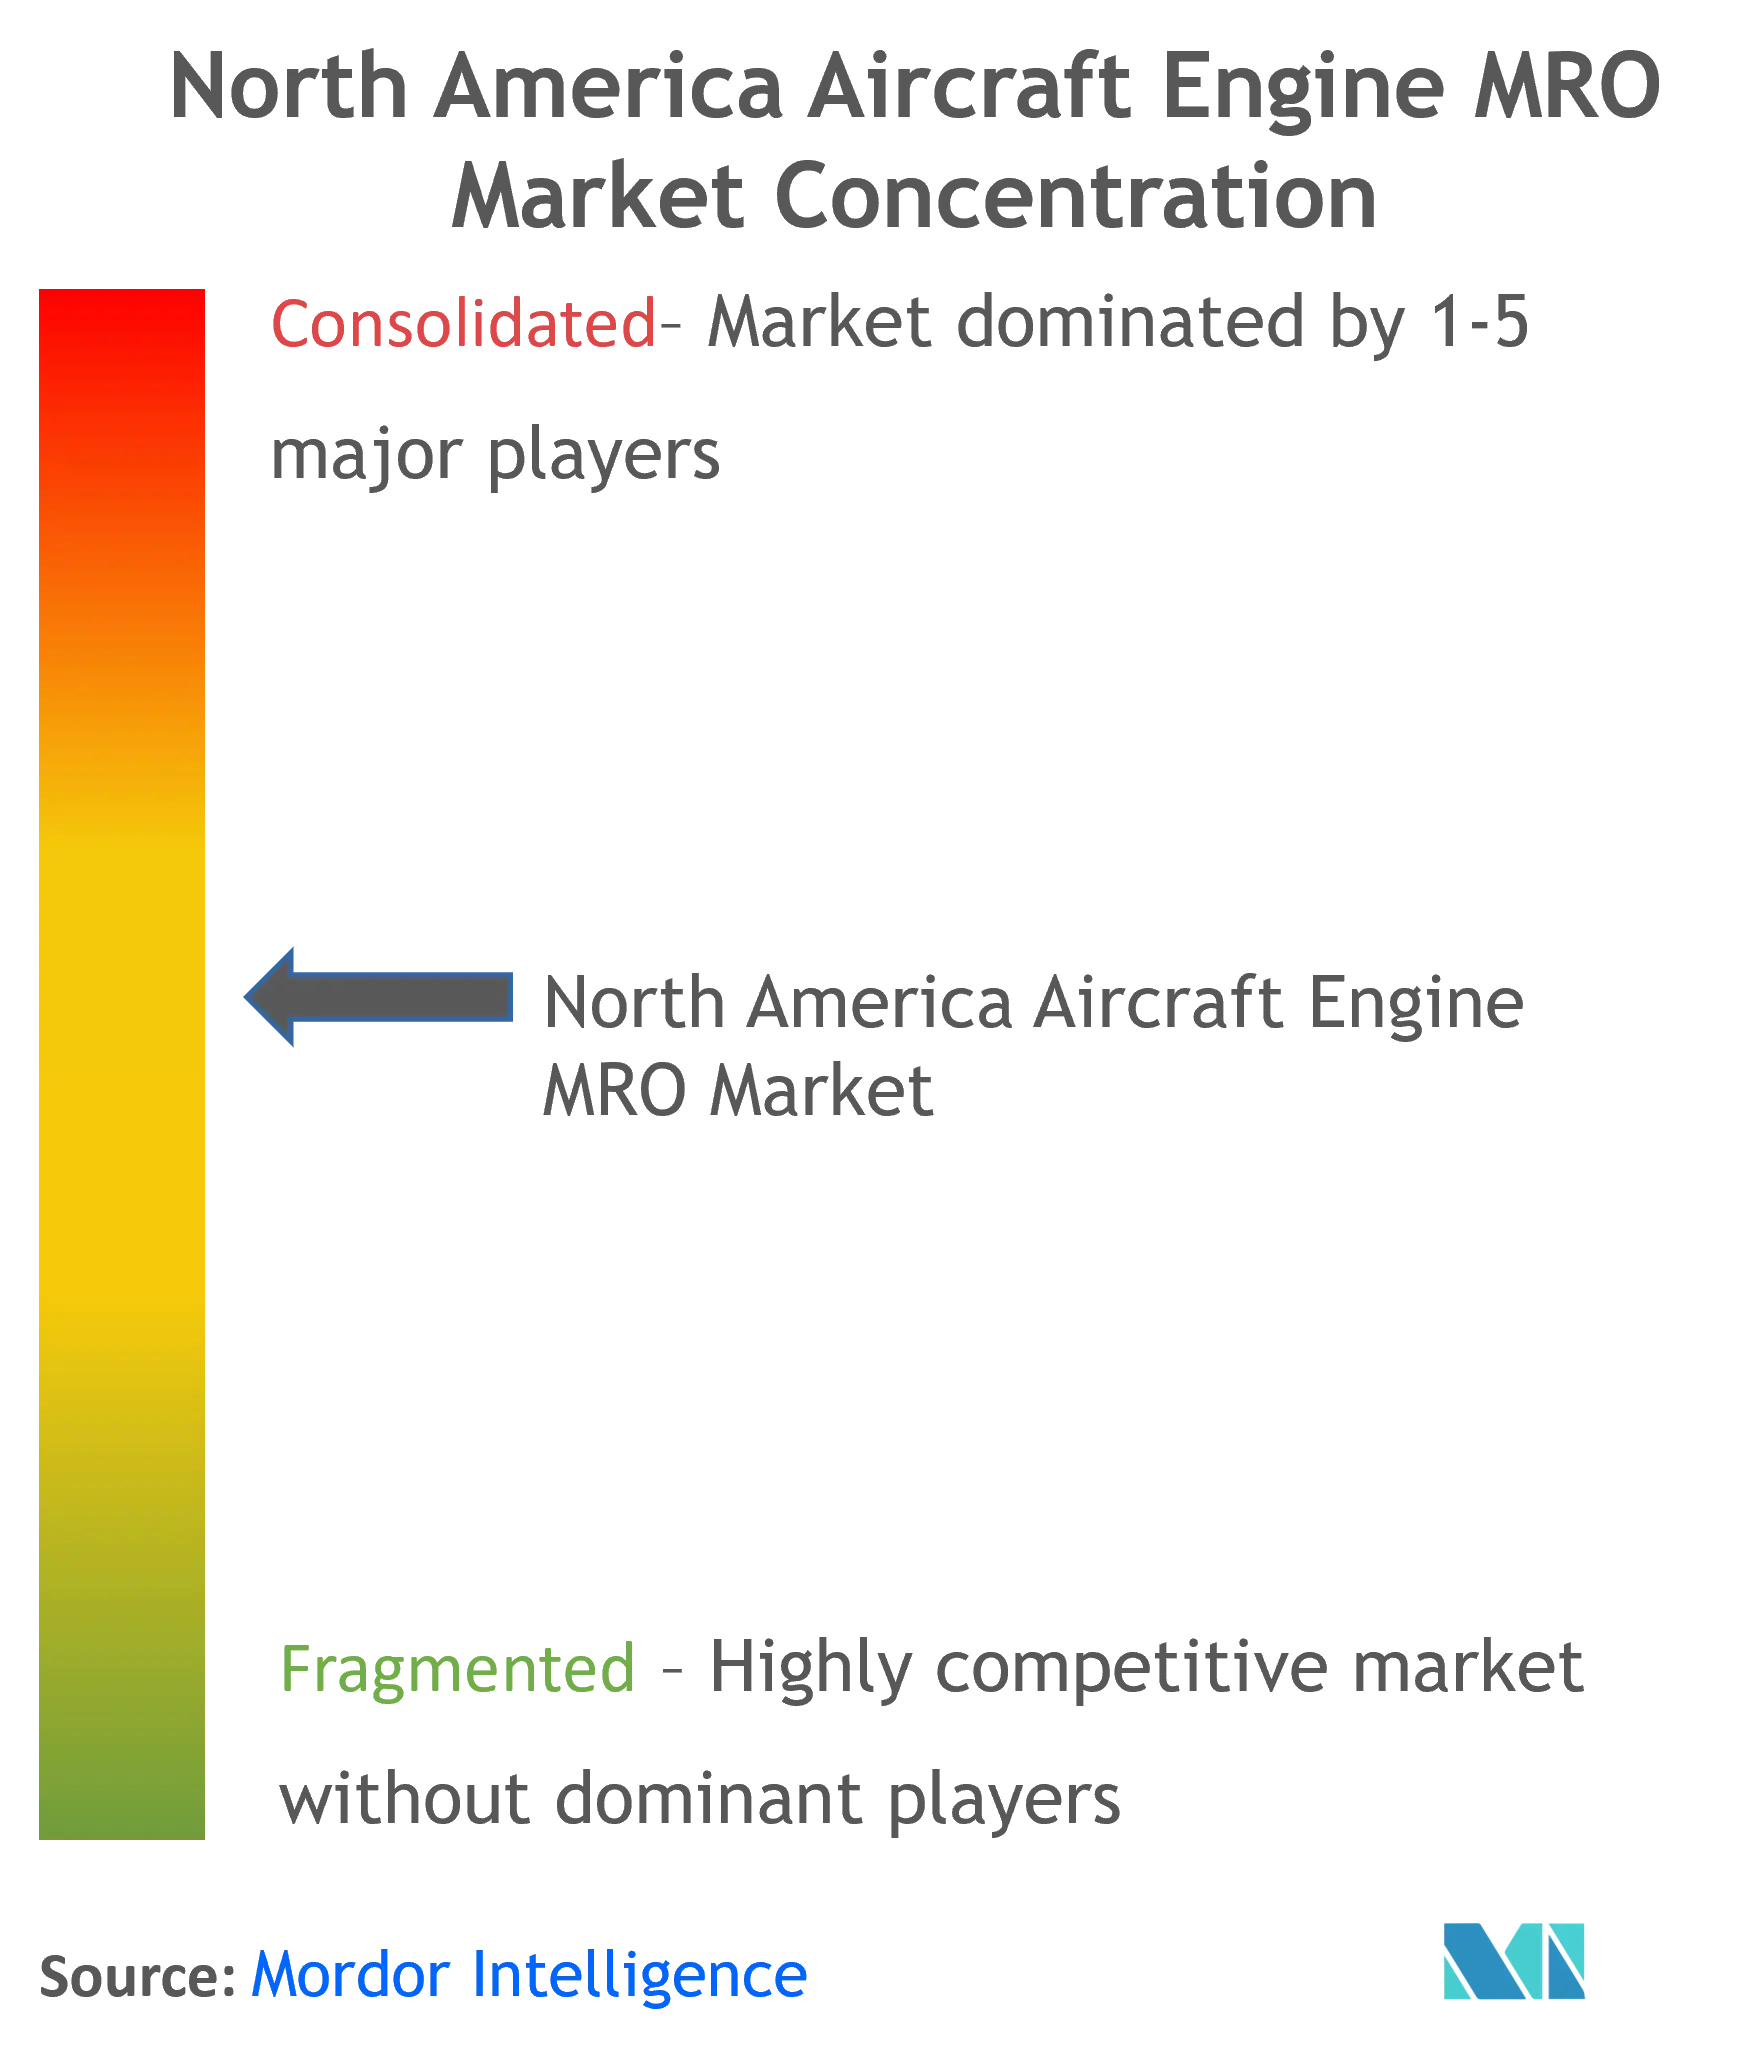 North America Aircraft Engine MRO Market Concentration